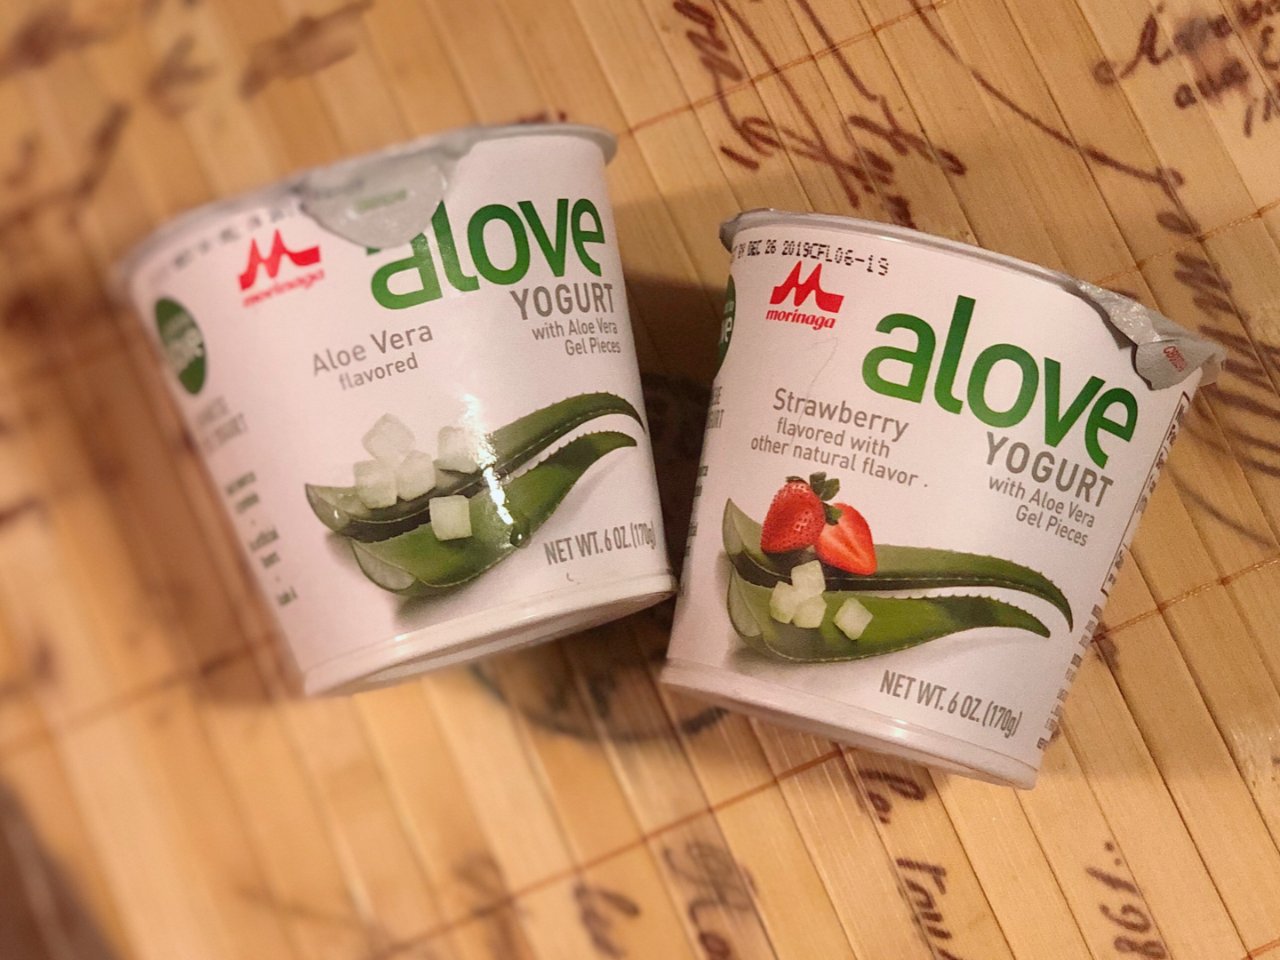 Alove Yogurt,Morinaga 森永制菓